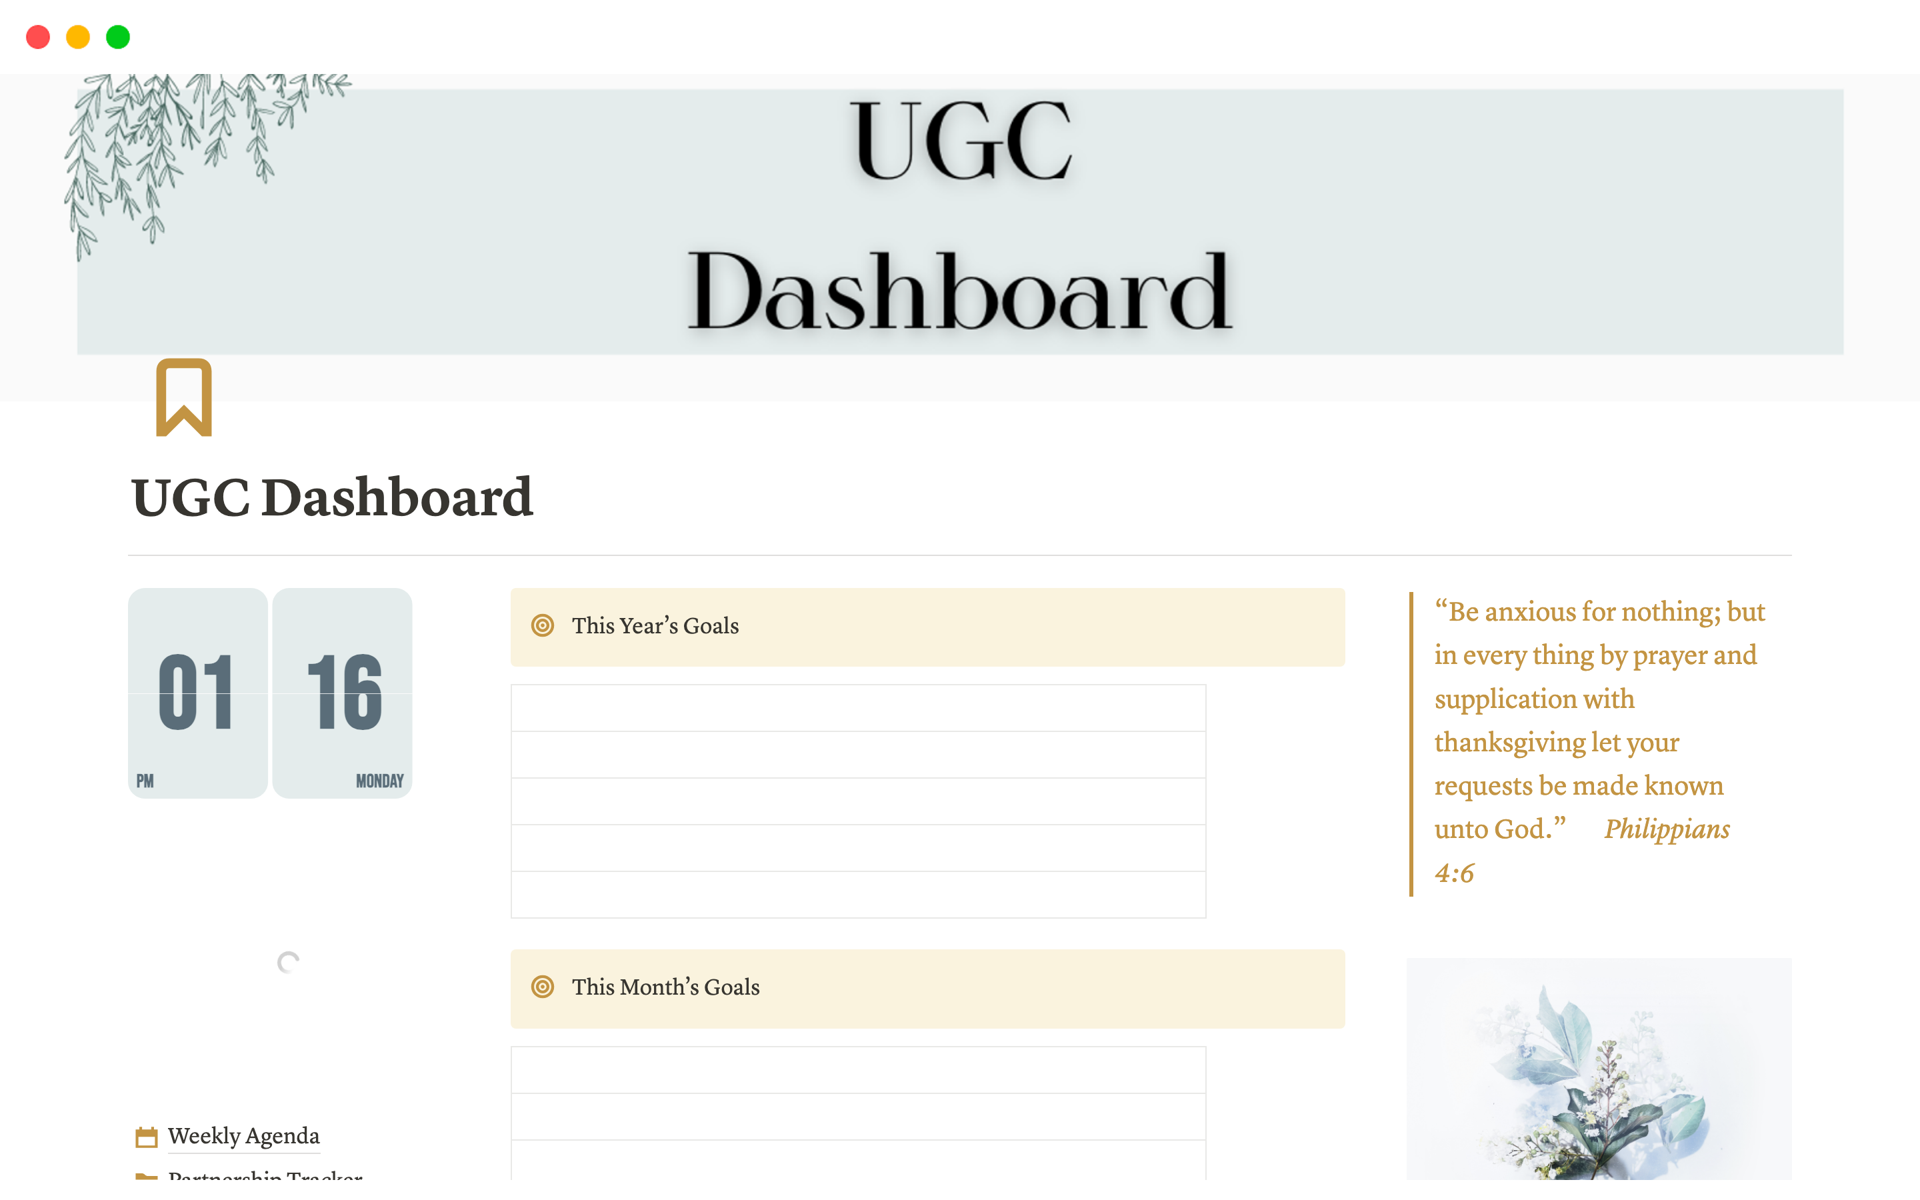 Aperçu du modèle de UGC Dashboard